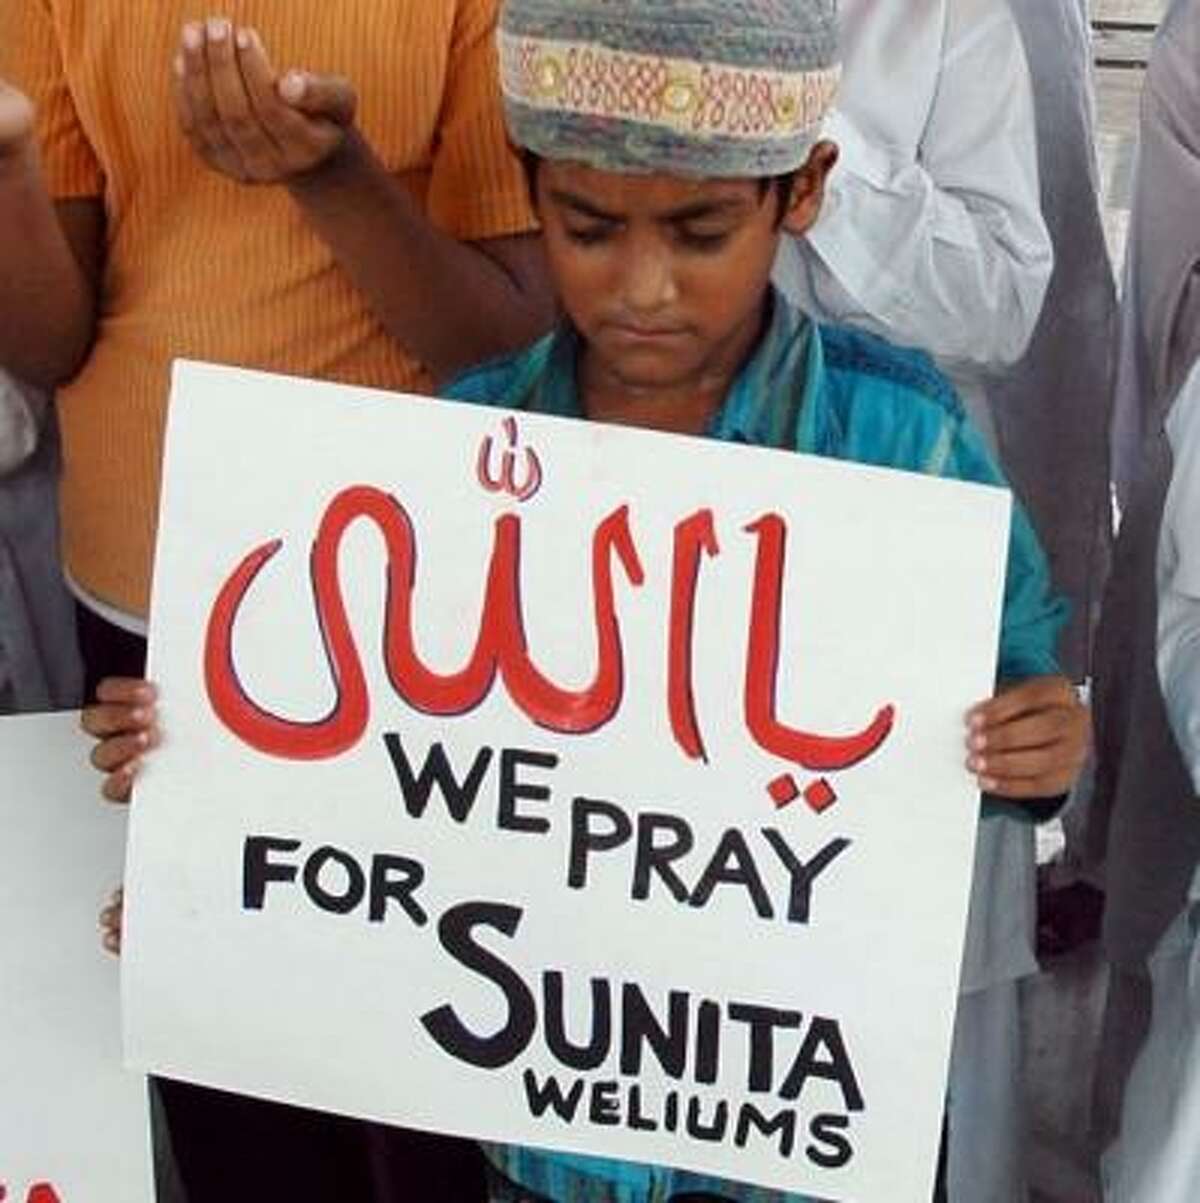 Muslim children in Ahmadabad, India, pray for the safe return Friday of Sunita Williams.